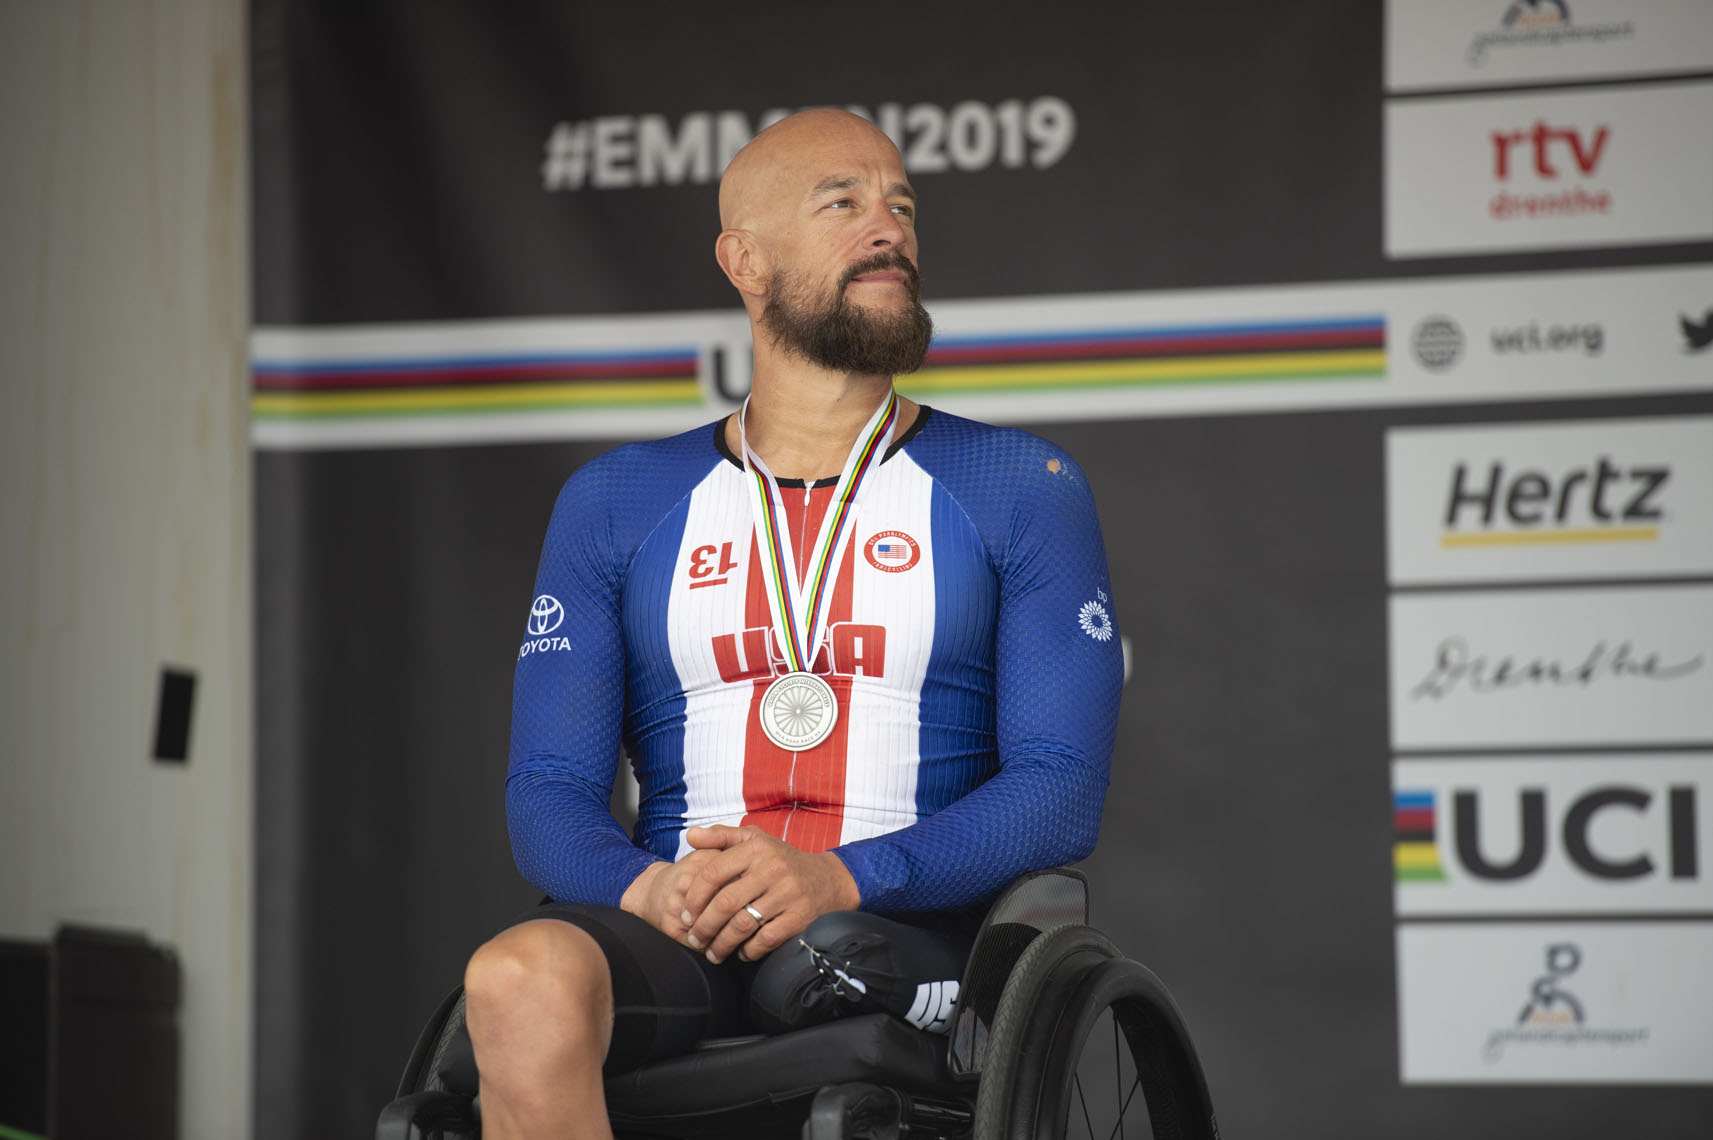 Tom Davis, 2019 Paracycling Road World Championships